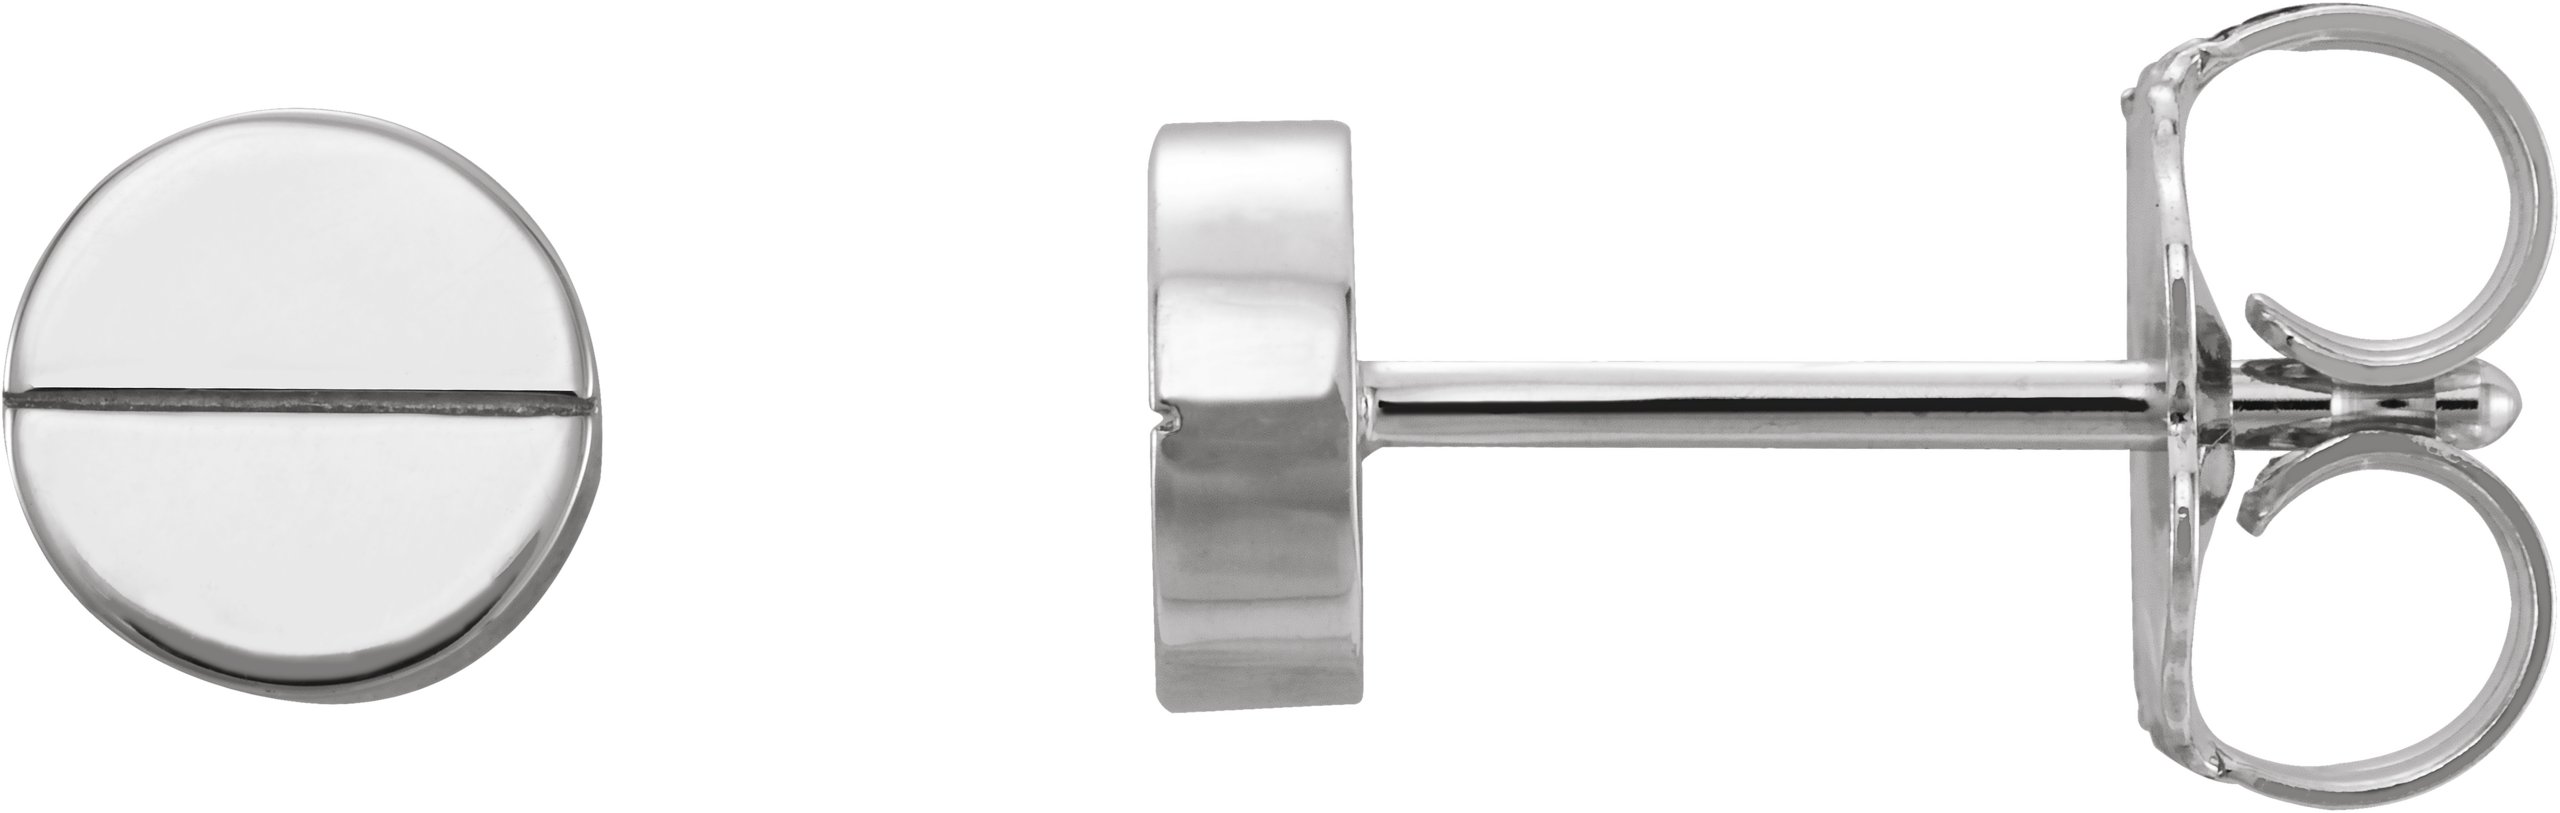 Platinum 4.9 mm Geometric Friction Closure Earrings